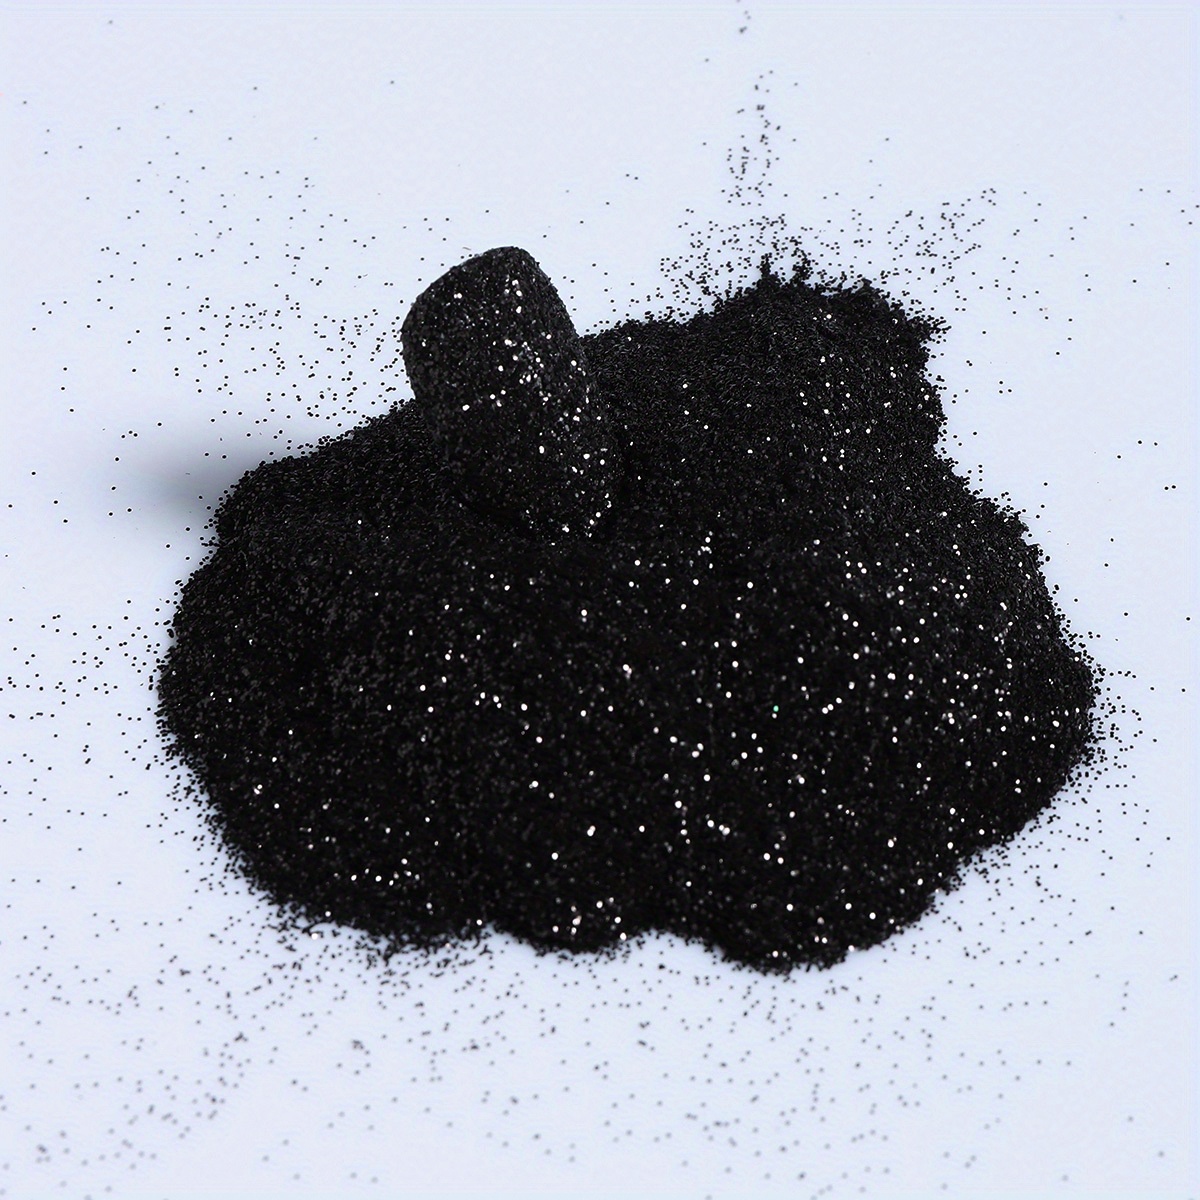 Purpurina negra para manualidades True Black | Purpurina negra brillante |  Polvo de decoración para accesorios de pasteles, manualidades de bricolaje